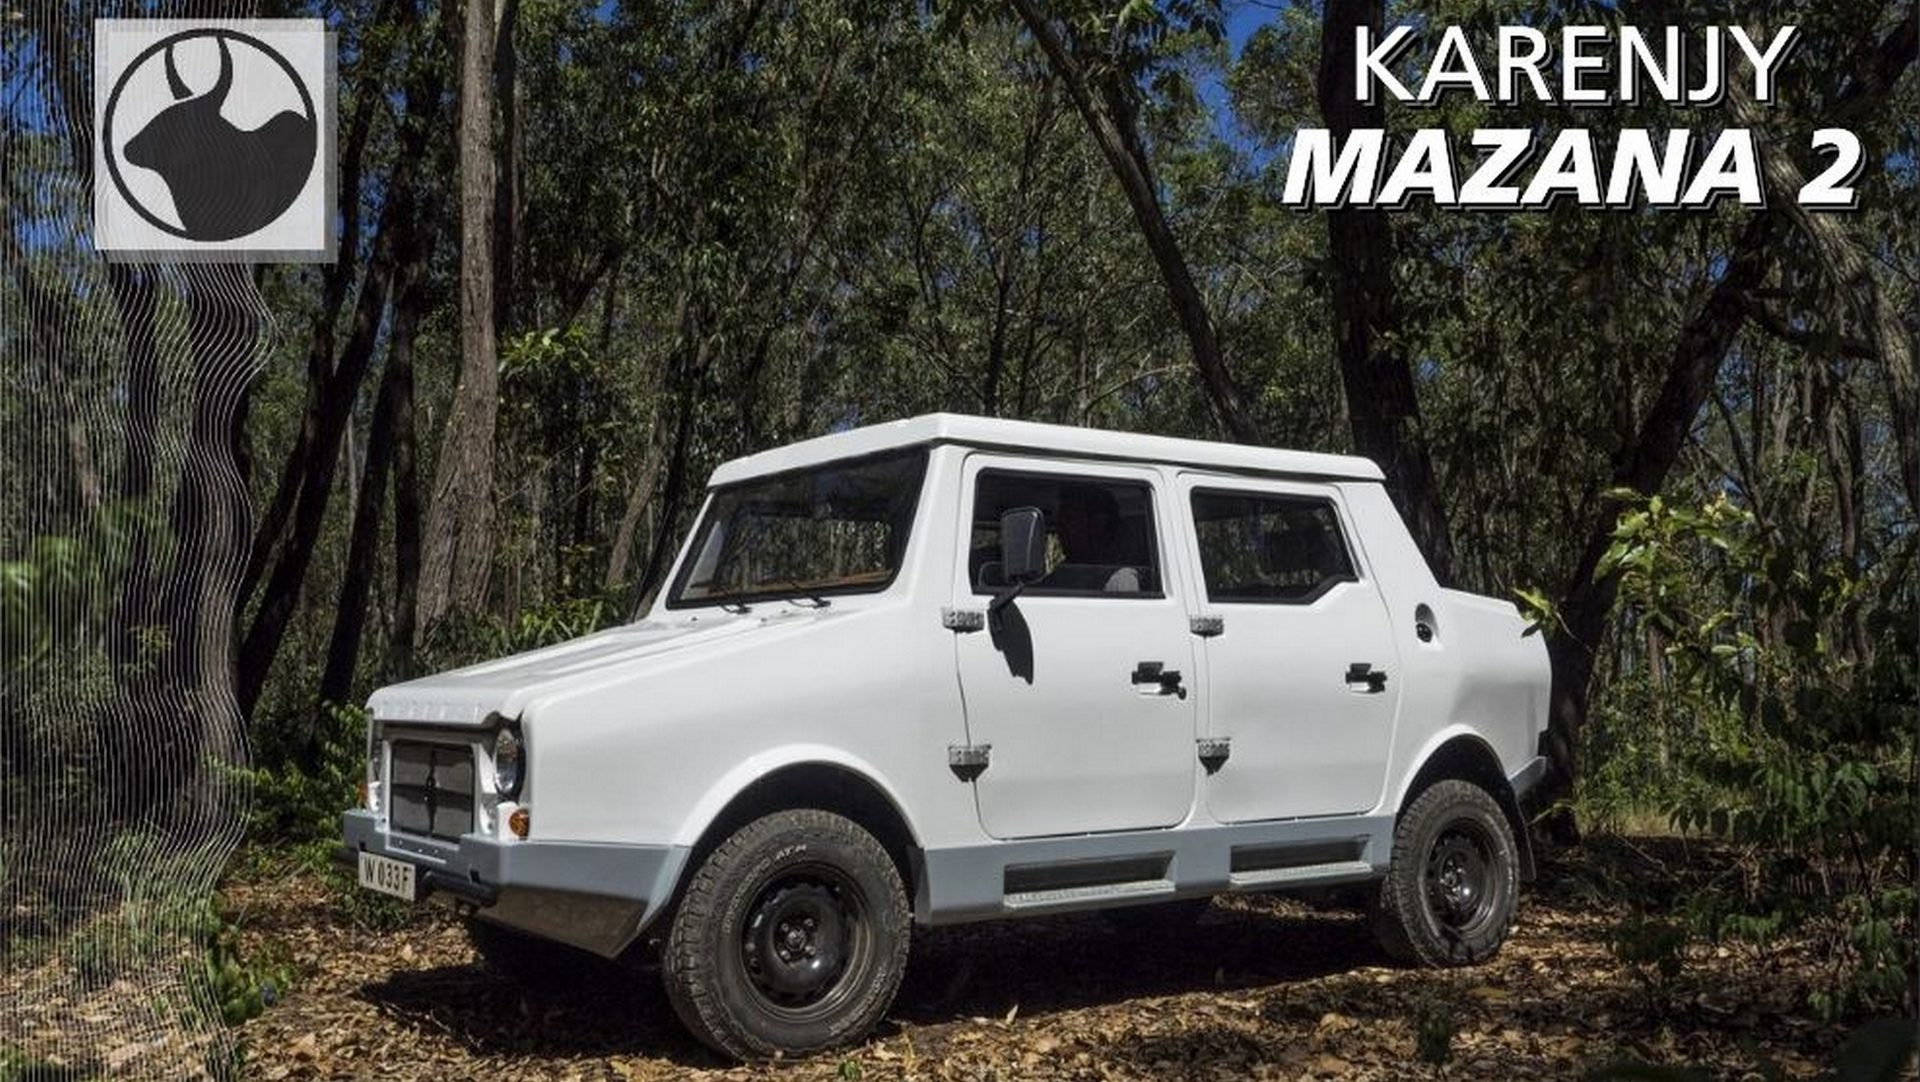 L'entreprise malgache Karenjy a construit la 'papamoblie' sur la base du modèle Mazanna 2 | © Karenjy.mg